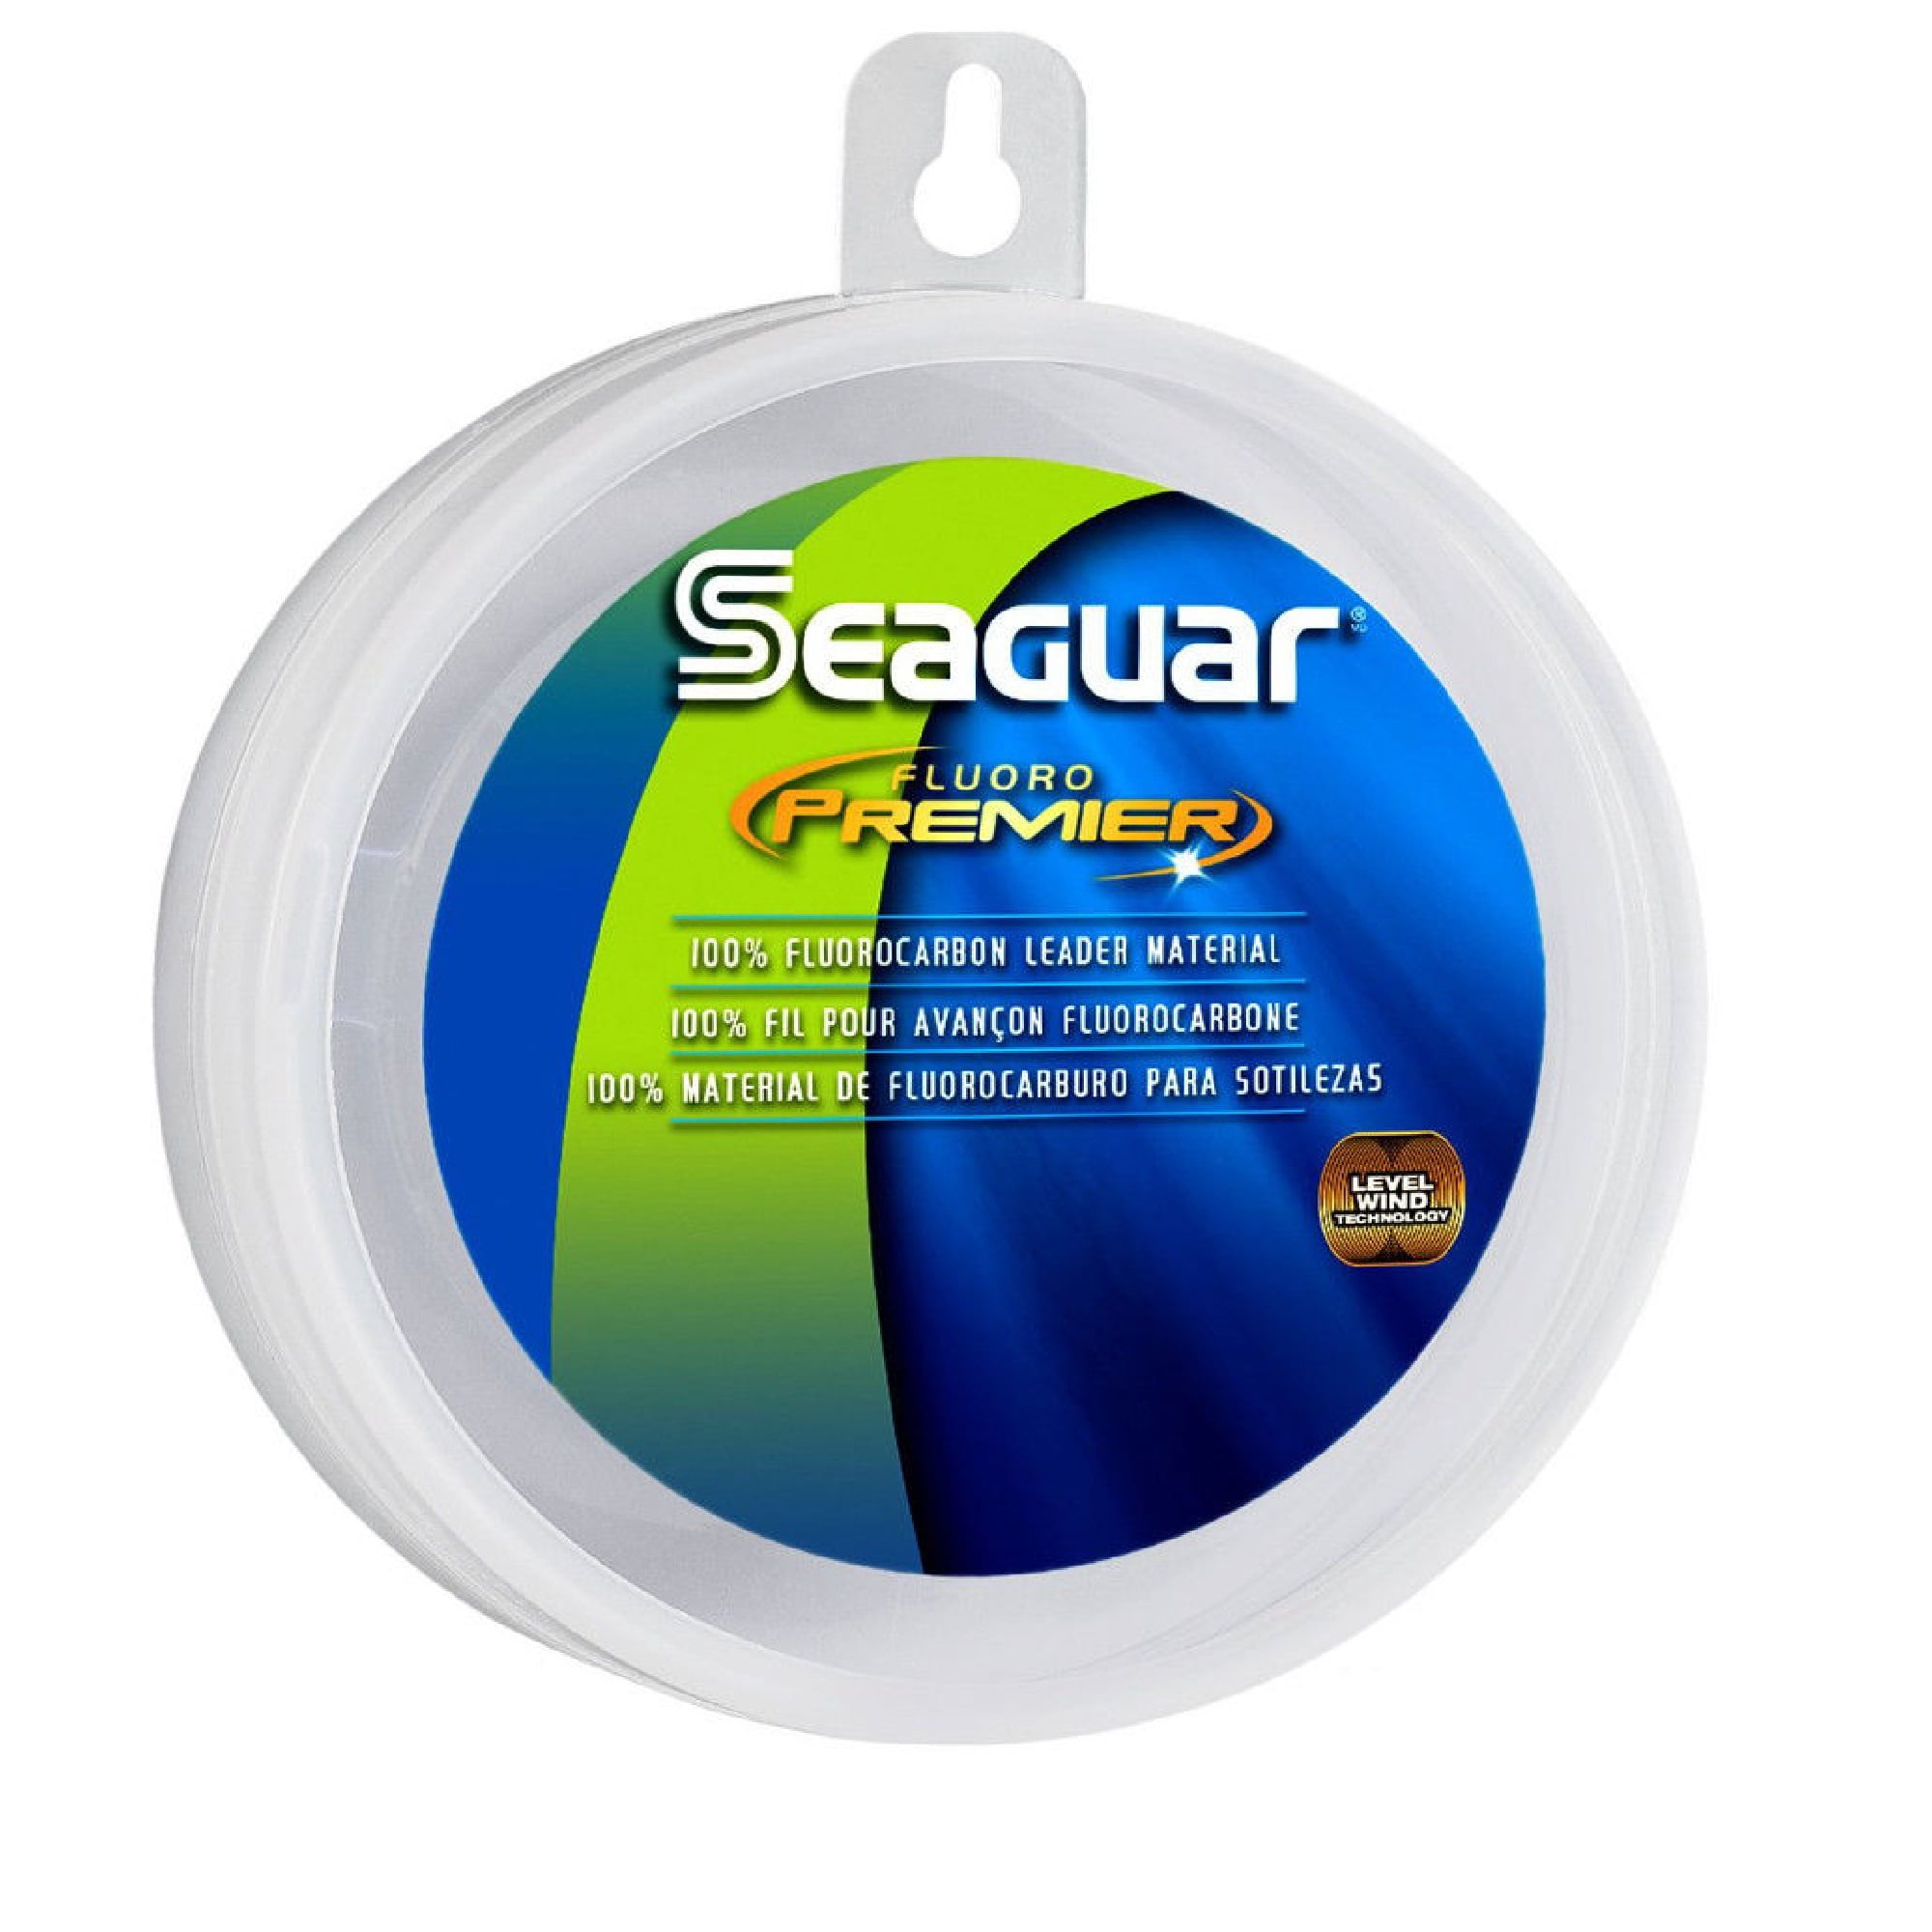 Seaguar Fluoro Premier 100% Fluorocarbon Fishing Line(DSF), 40lbs